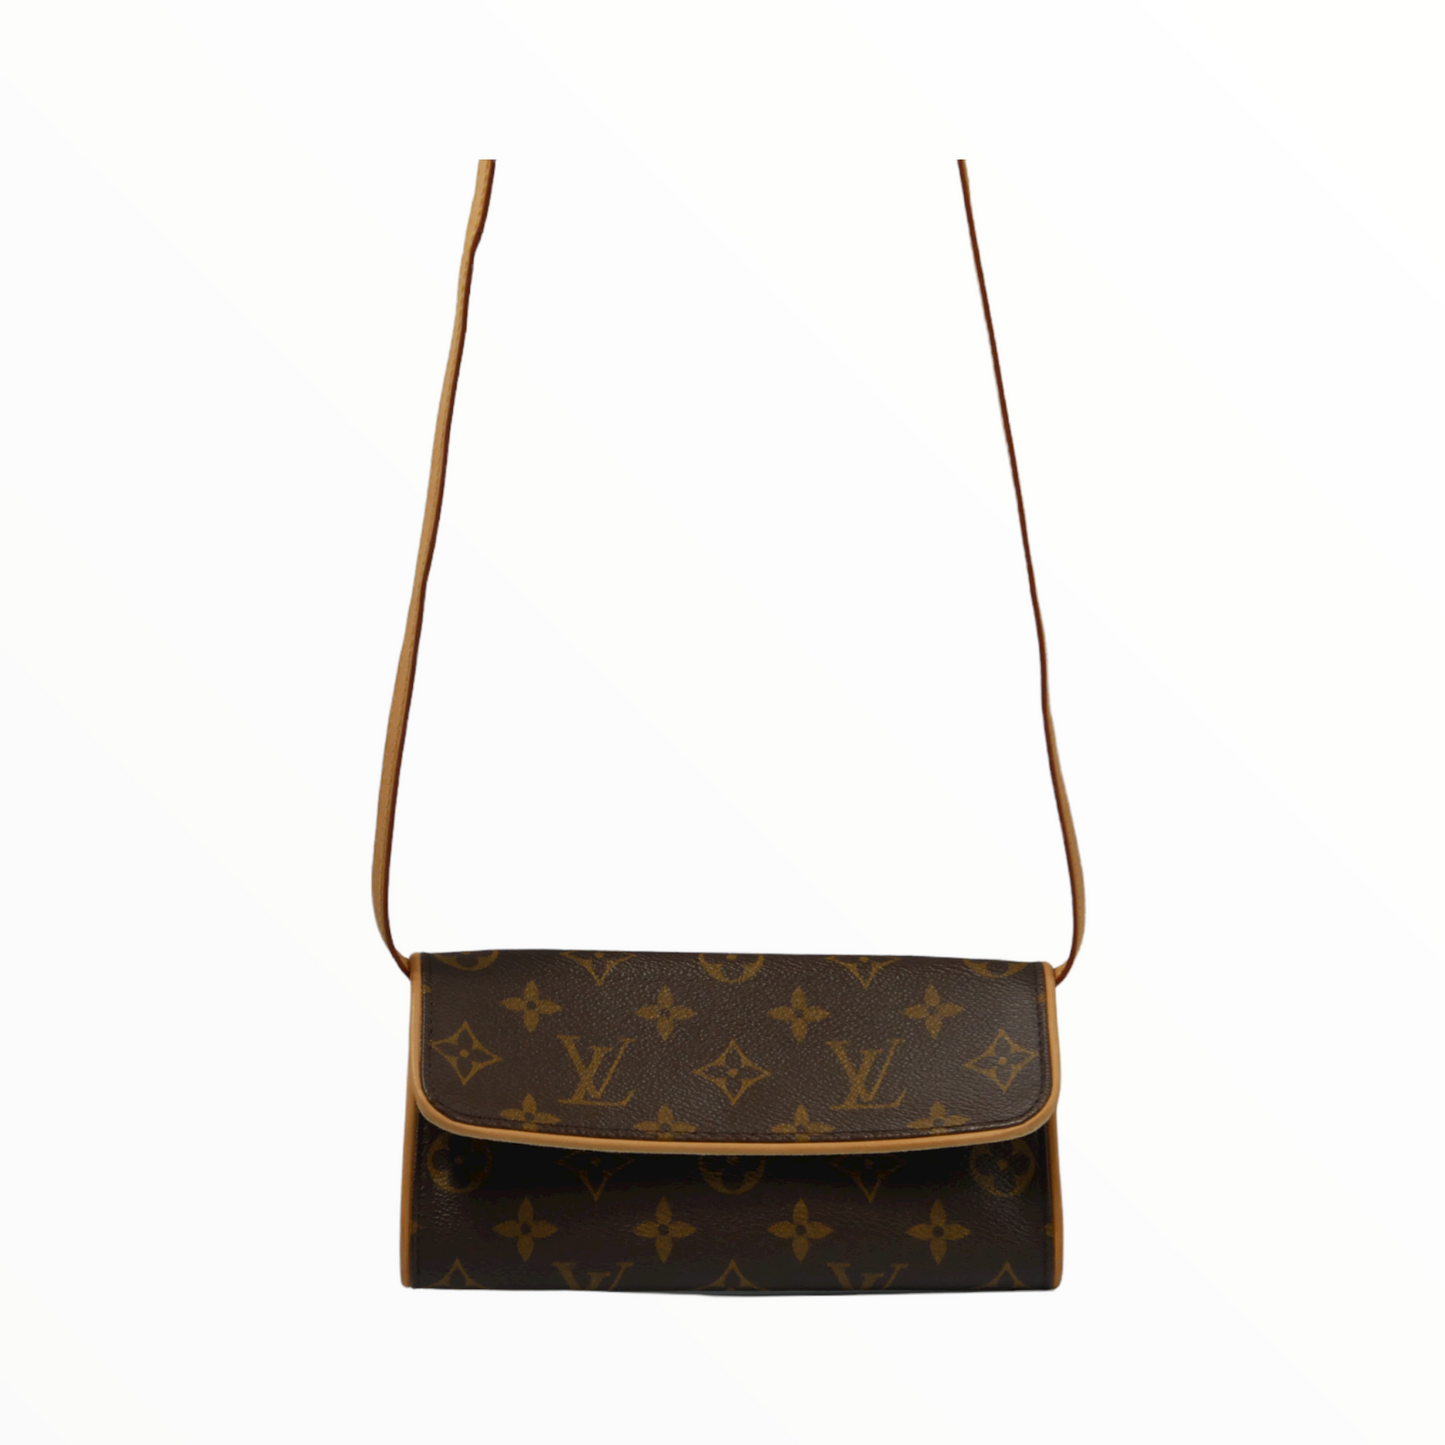 Louis Vuitton monogram wallet with strap